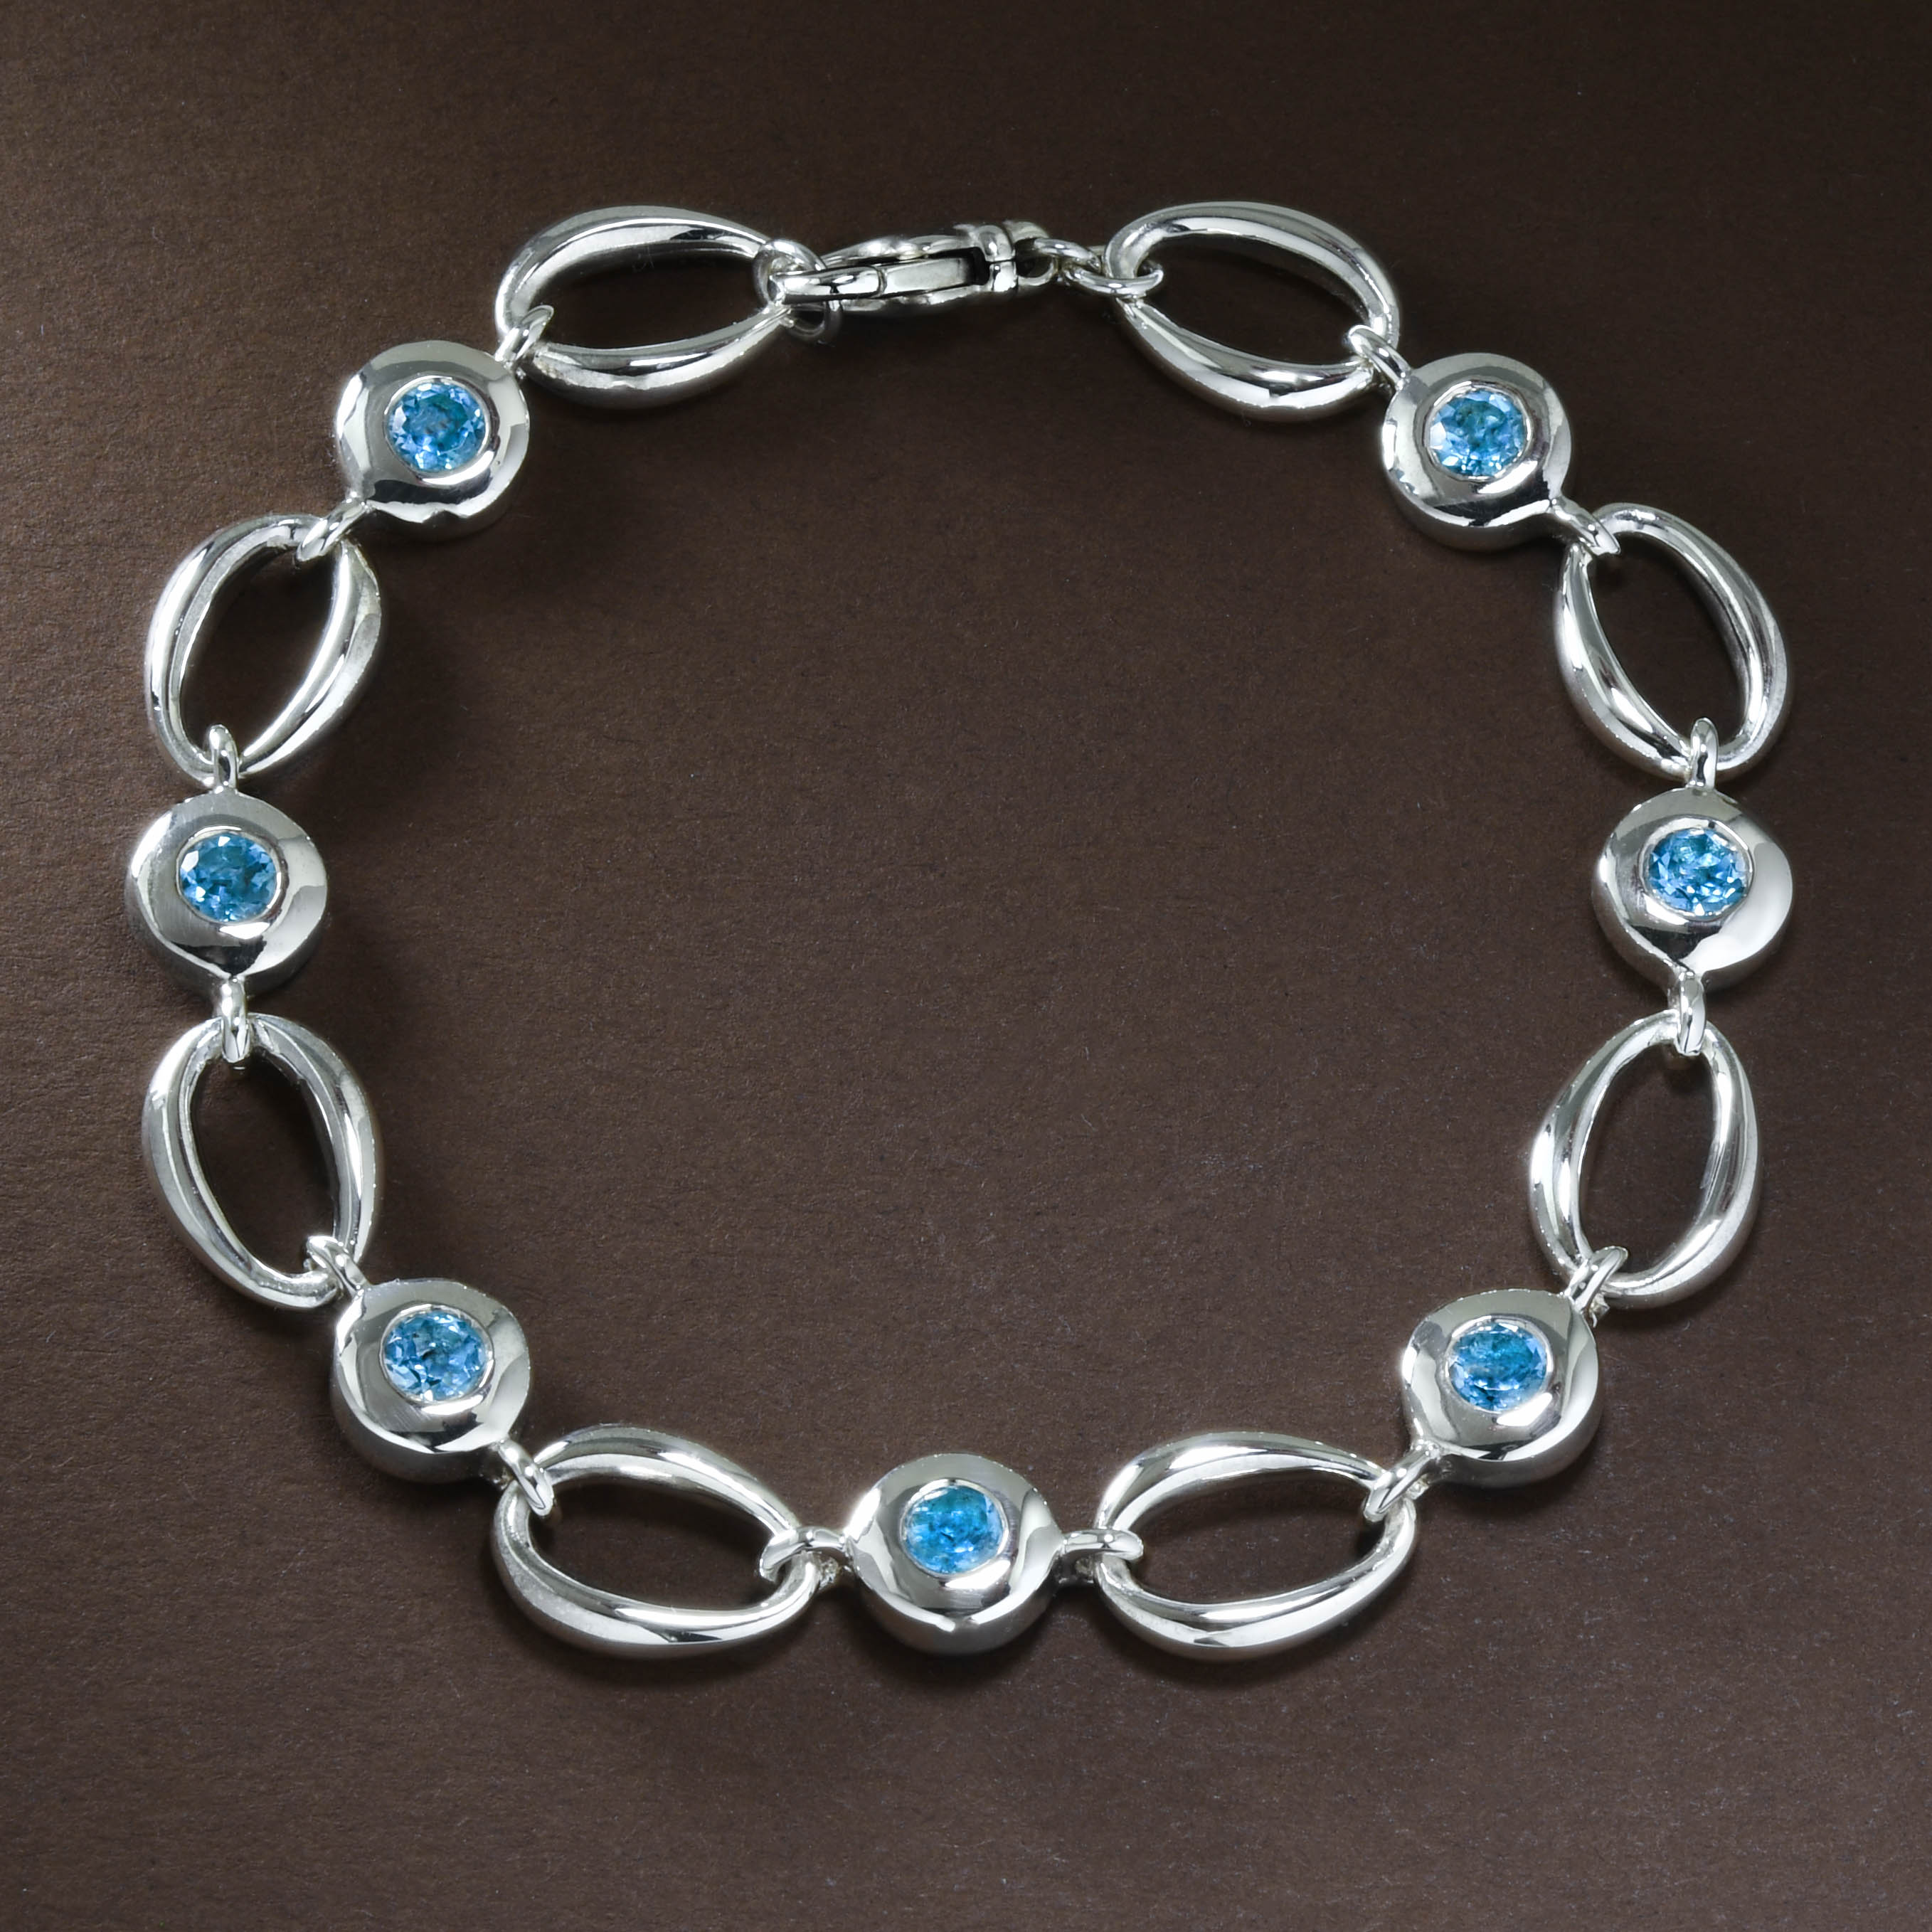 Bracelets – Diamond / Silver / Gold Bracelets at Plante Jewelers Swansea MA